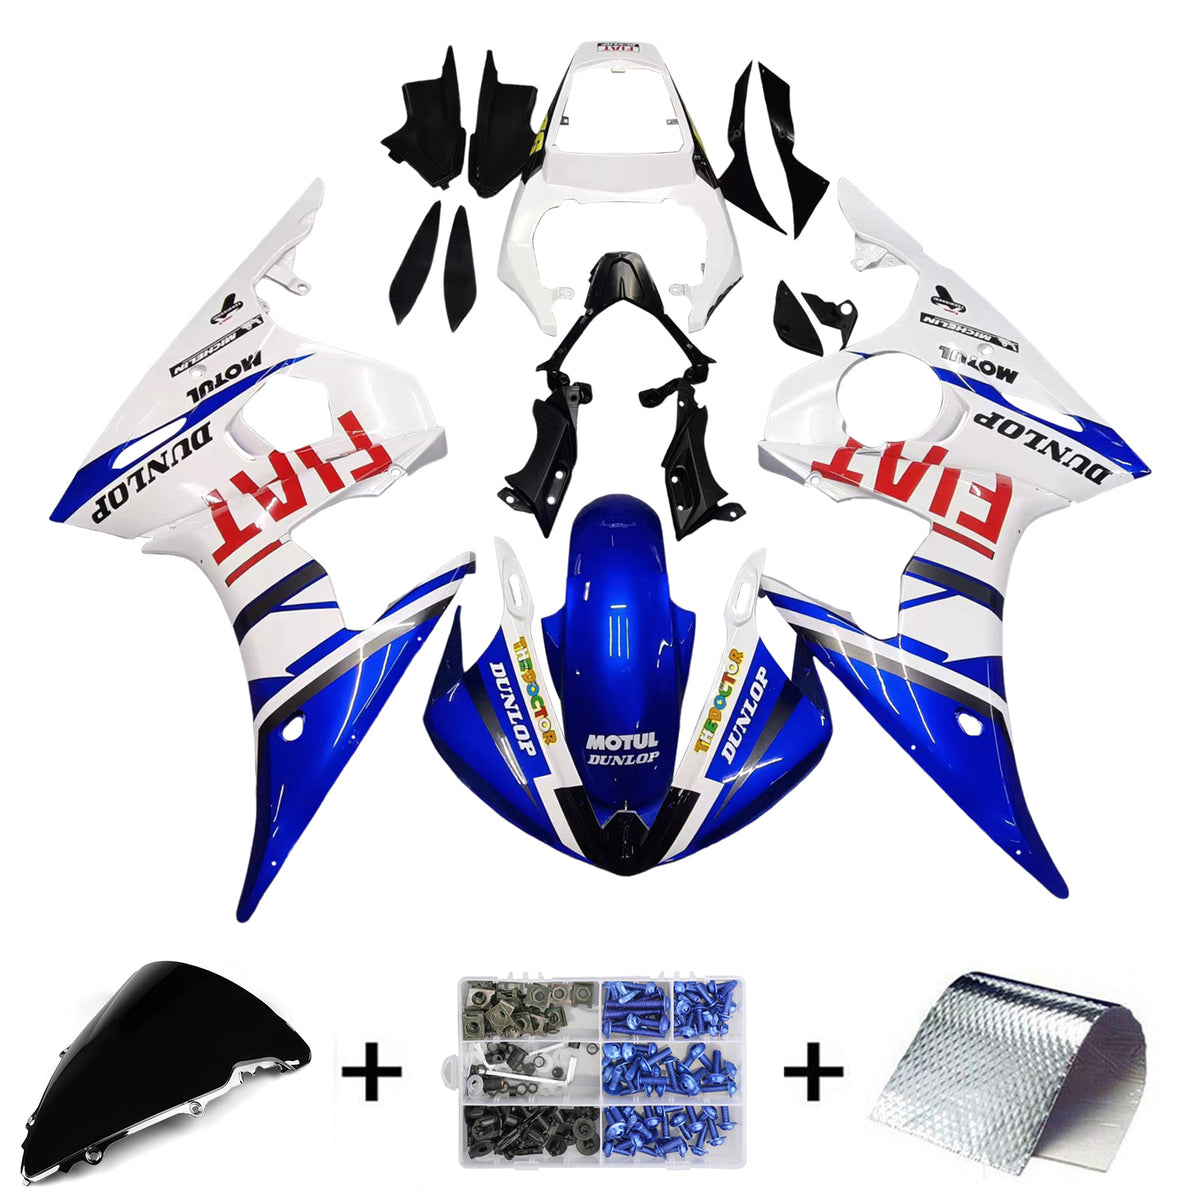 Kit colore bianco e blu per carenatura Amotopart 2005 Yamaha R6